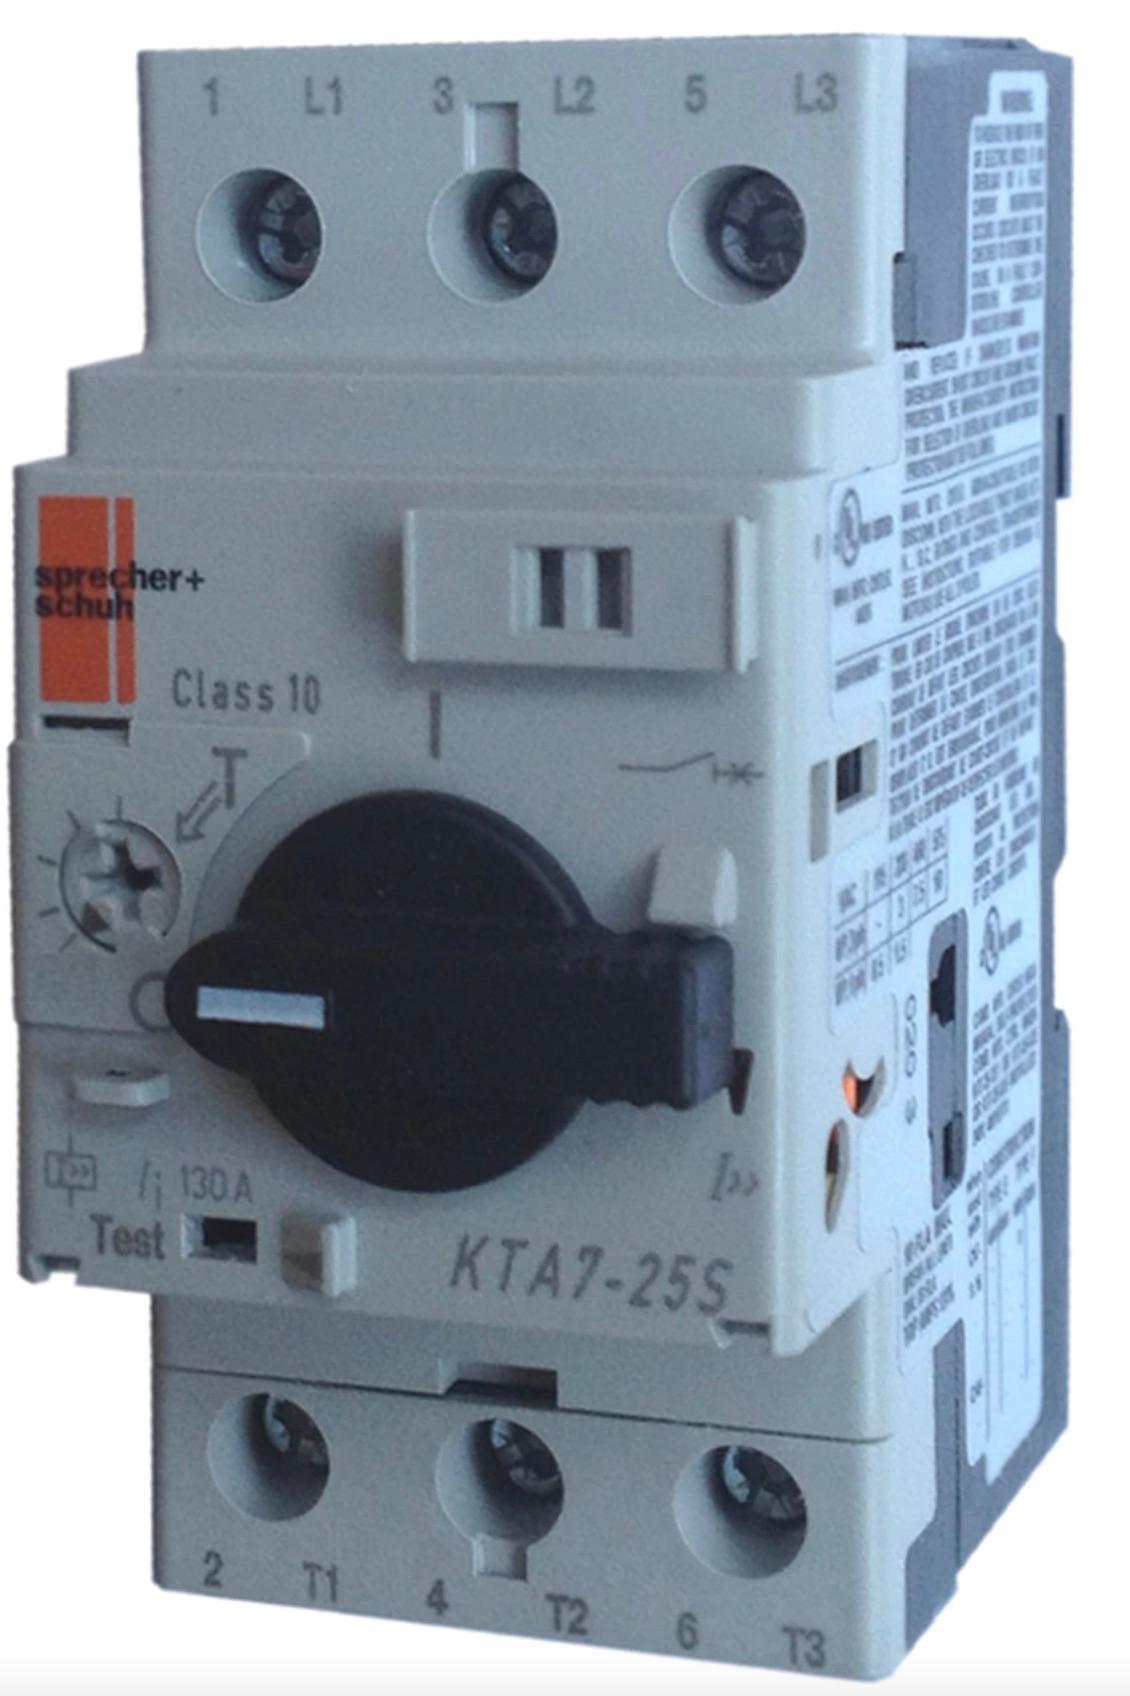 Sprecher + Schuh KTA7-25S-25A Manual motor controller, 325 Amps, 18...25 A Current Adjustment Range , Standard Interrupting Capacity